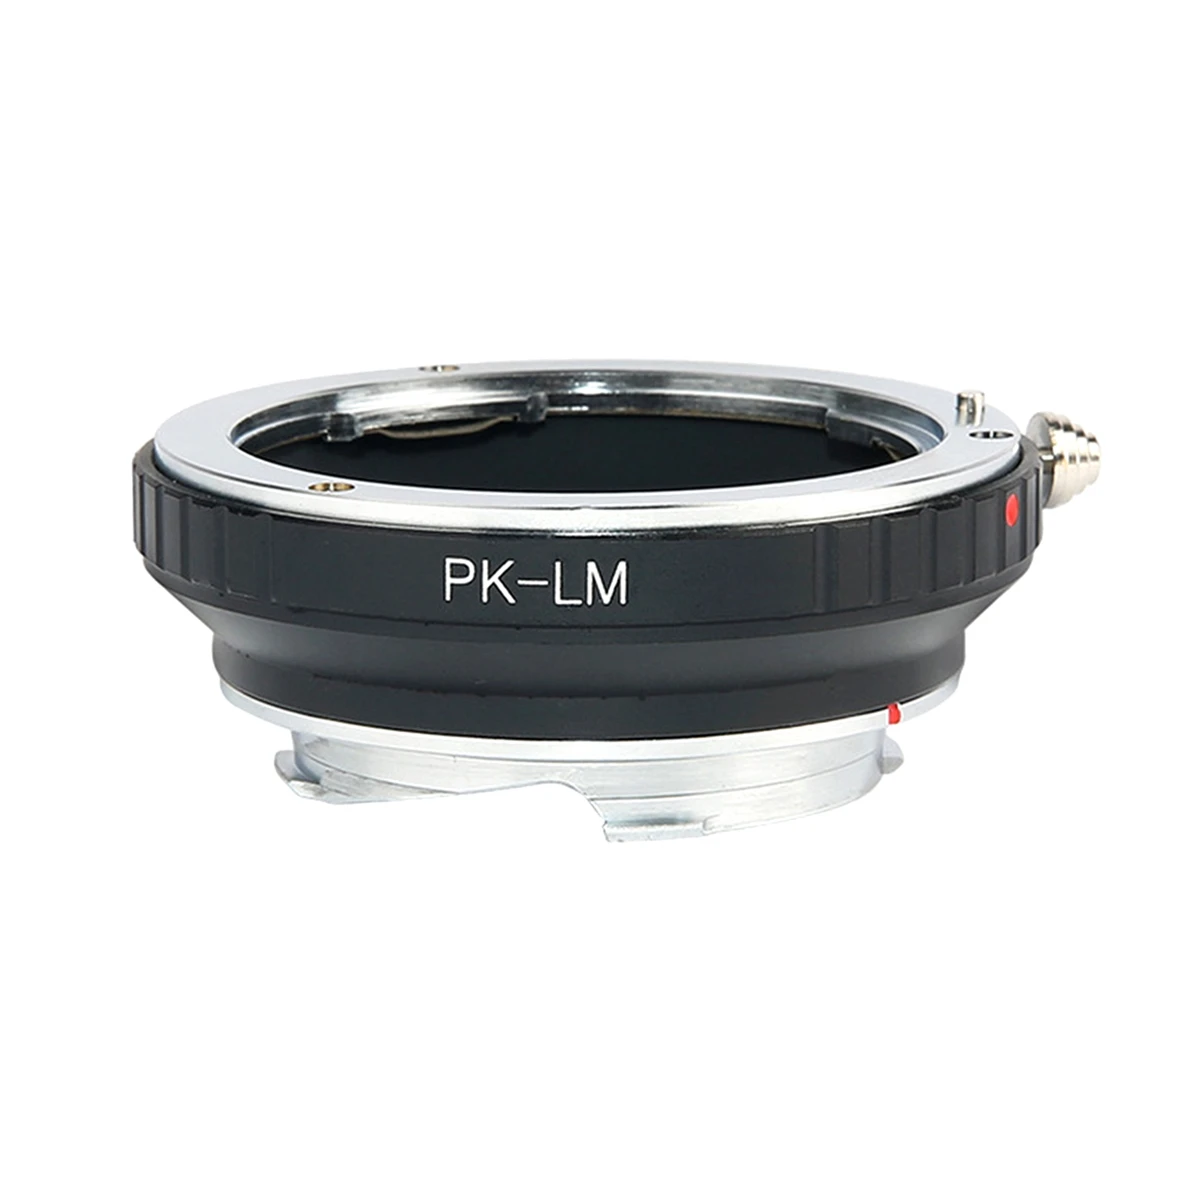 

PK-LM Lens Adapter Ring for Lenses to M Bodies